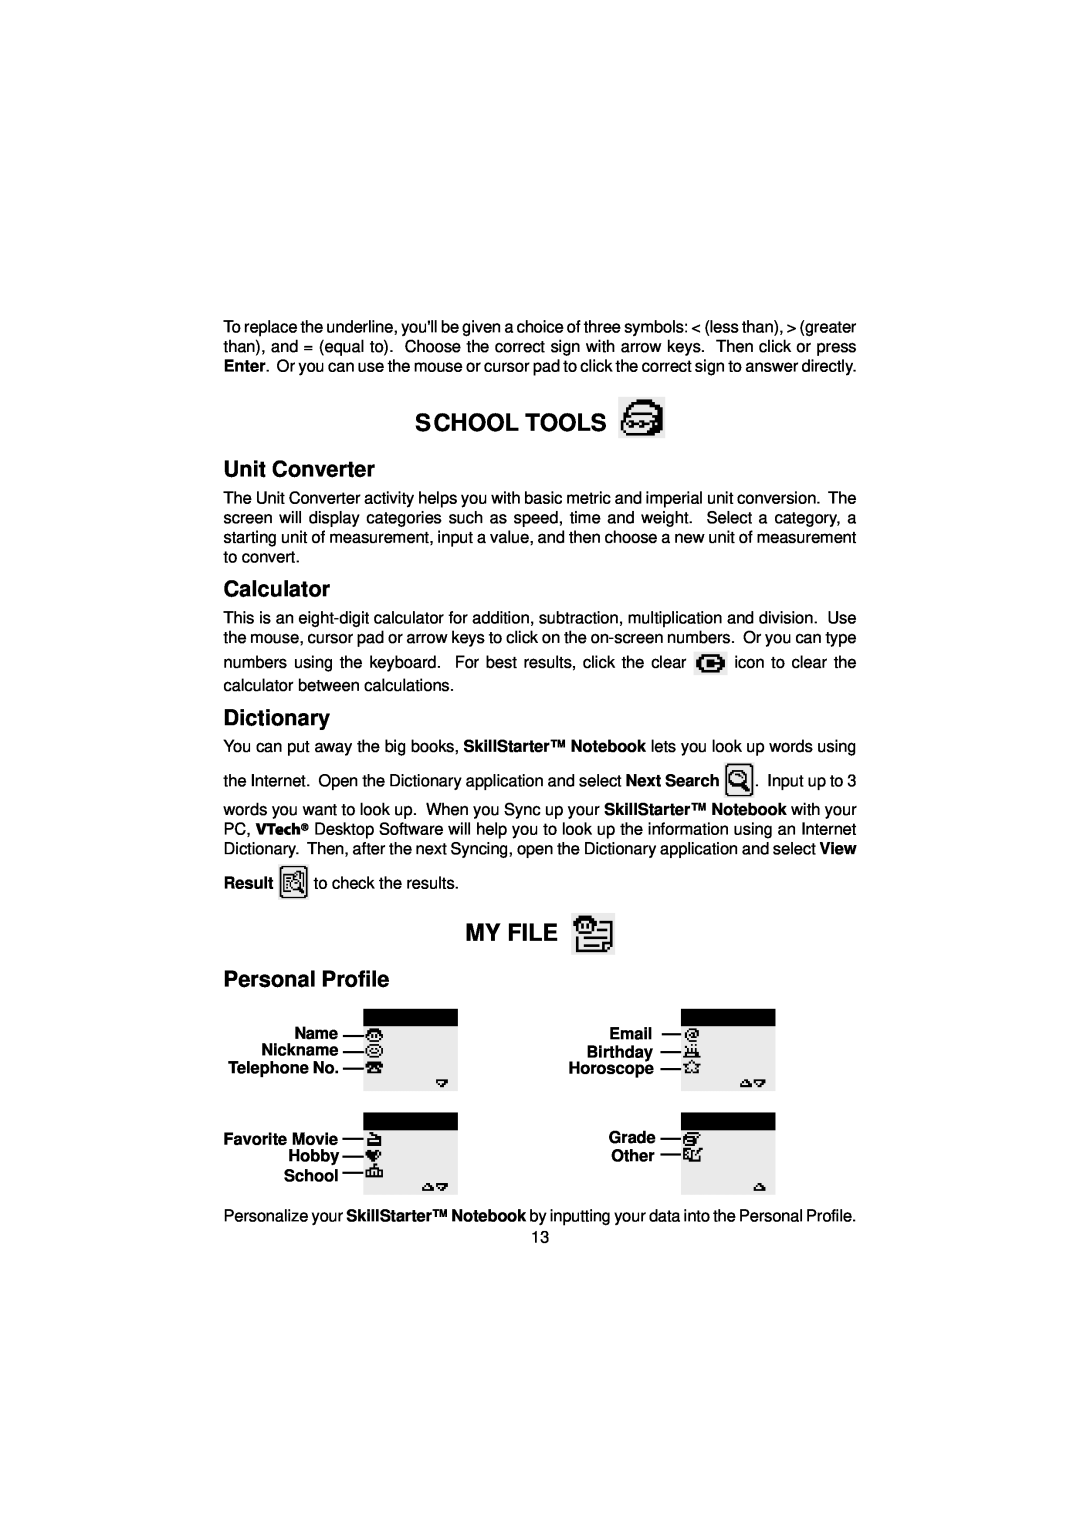 VTech SkillStarter Notebook manual S Chool Tools, My File, Unit Converter, Calculator, Dictionary, Personal Profile 